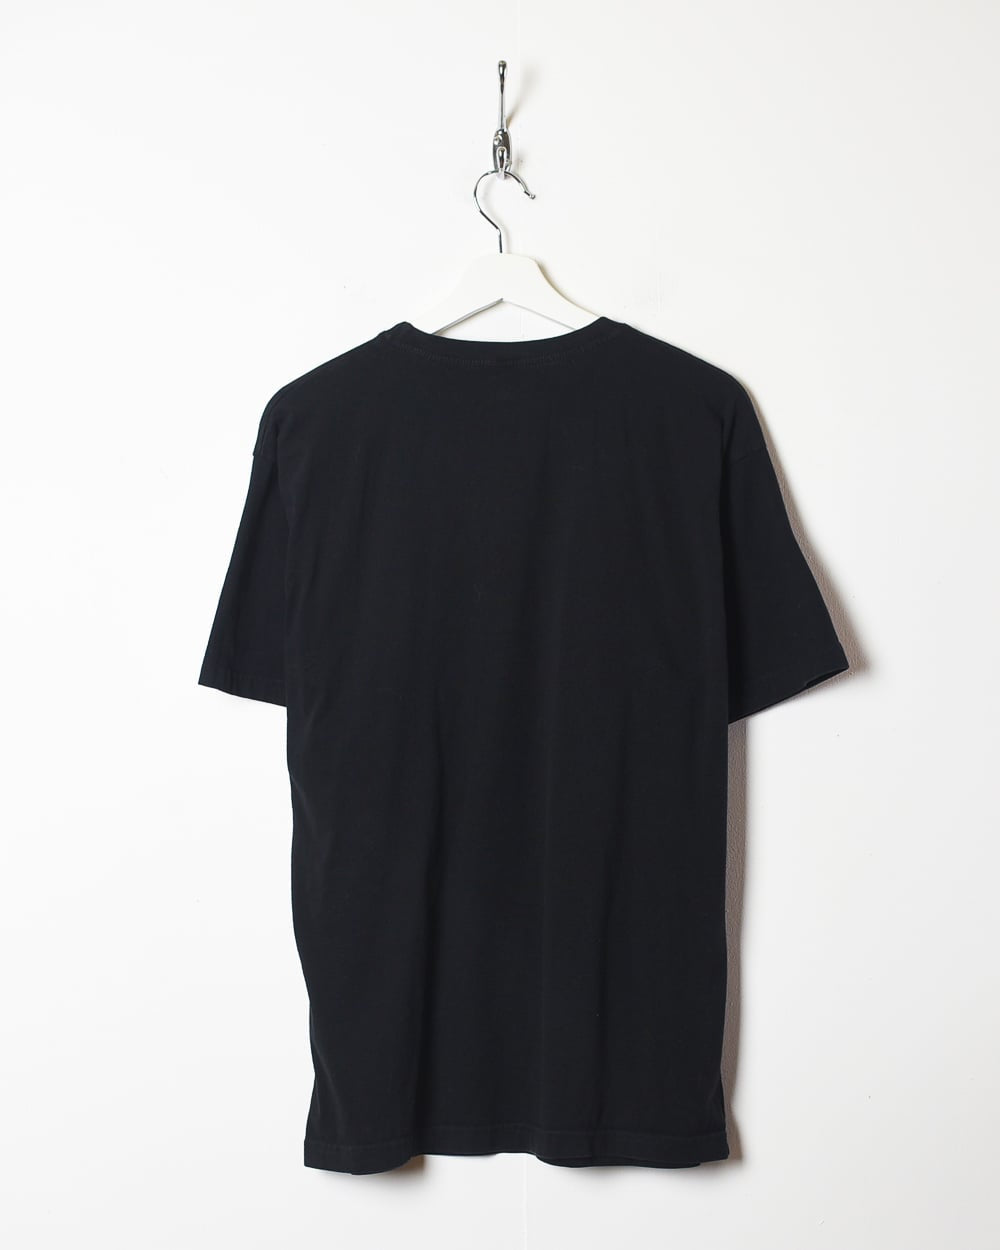 Black Nirvana T-Shirt - Large